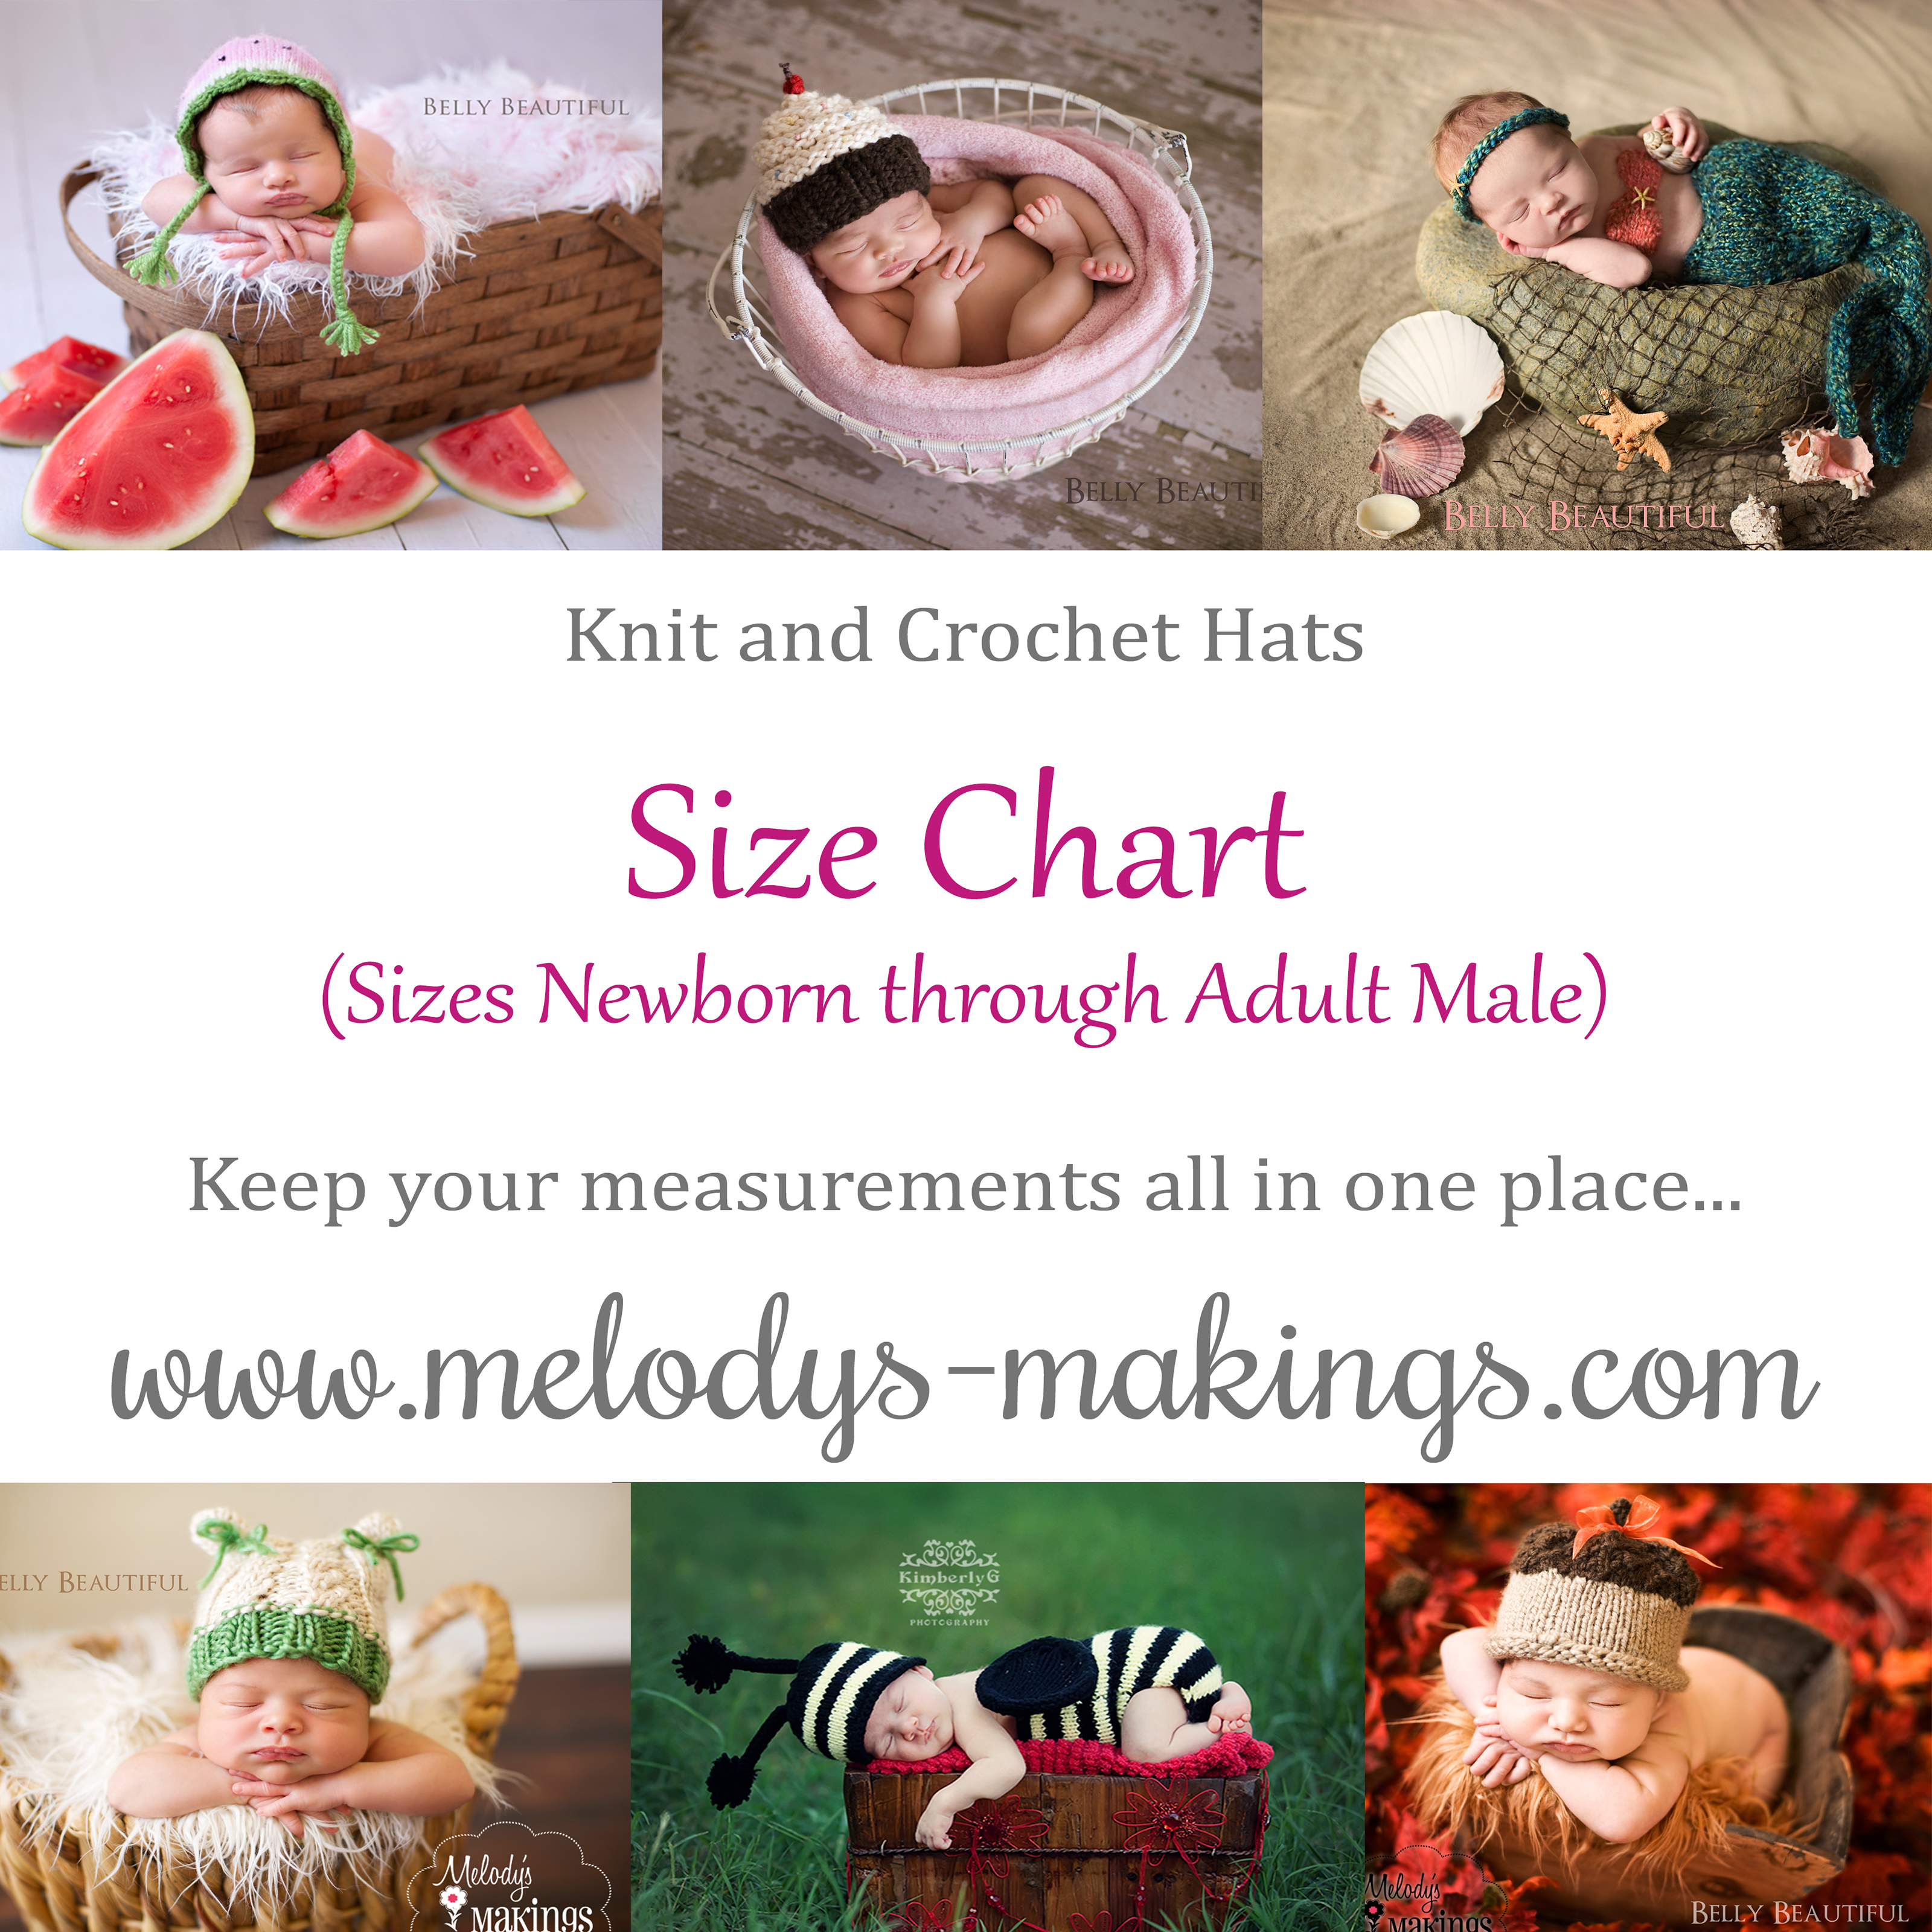 Measurement Chart, Size Chart for making hats, crochet, knit